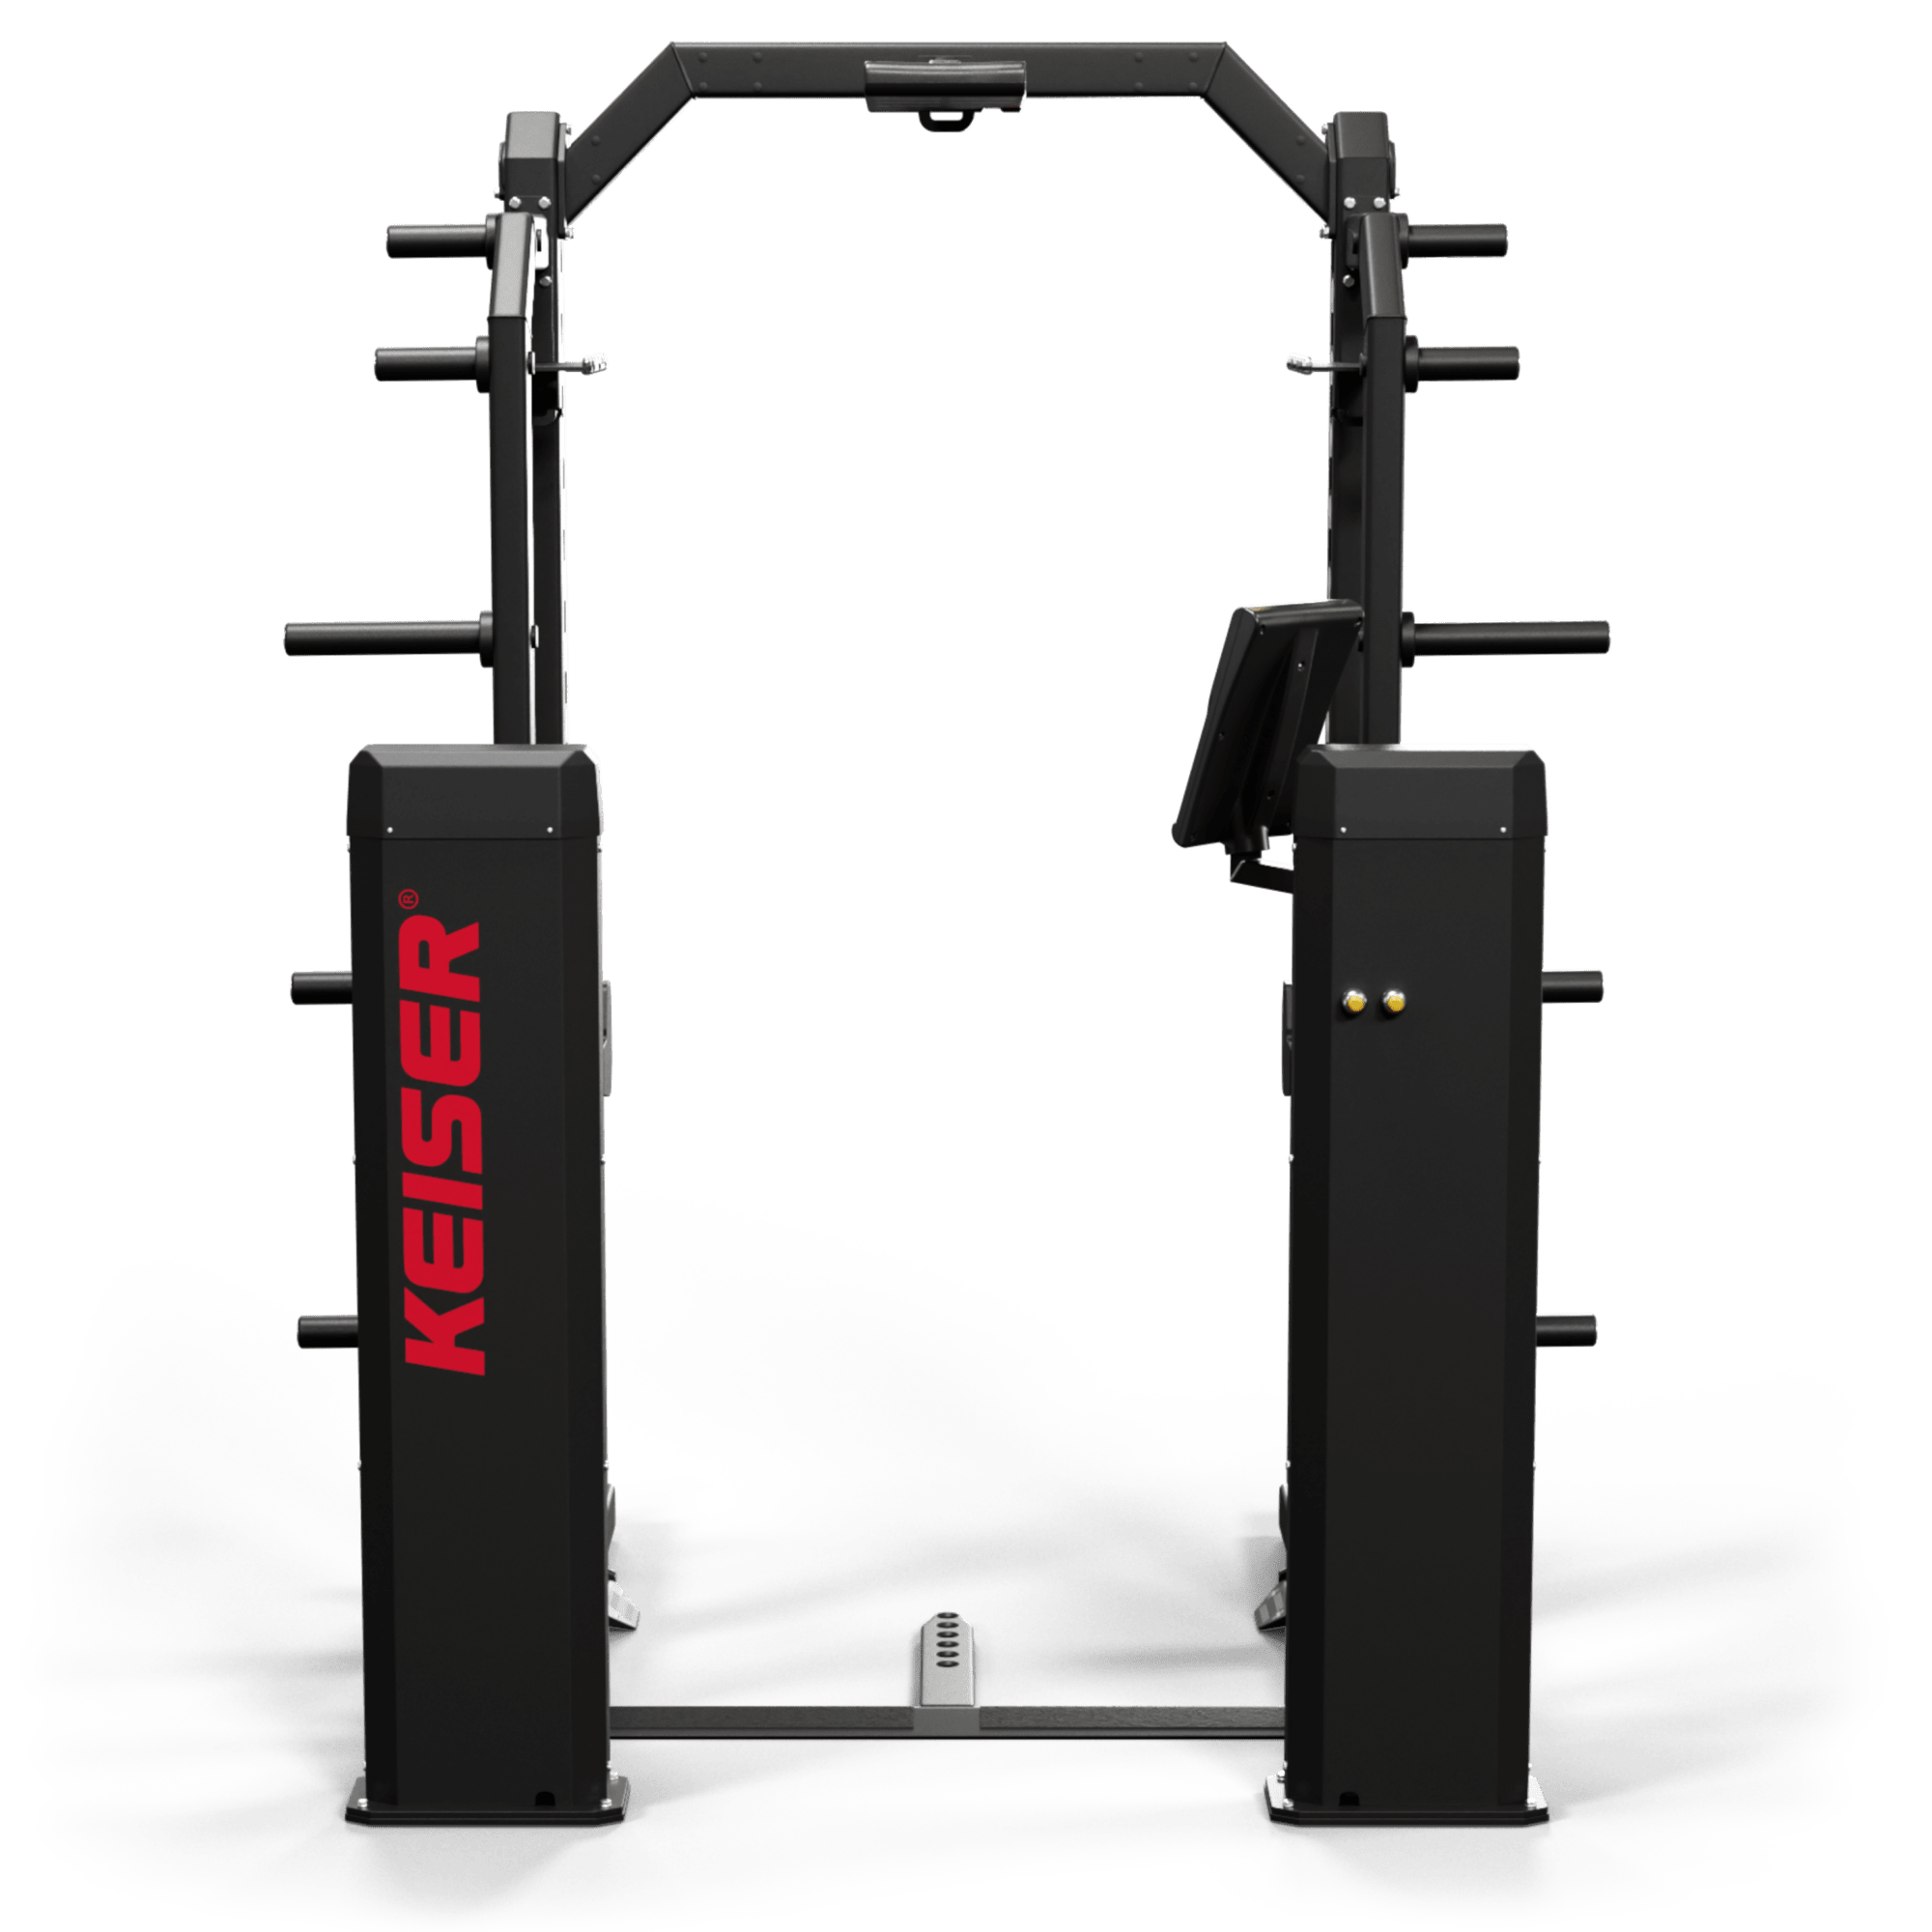 Keiser 8' Half Rack Short Base avec foot pedals - Power Display